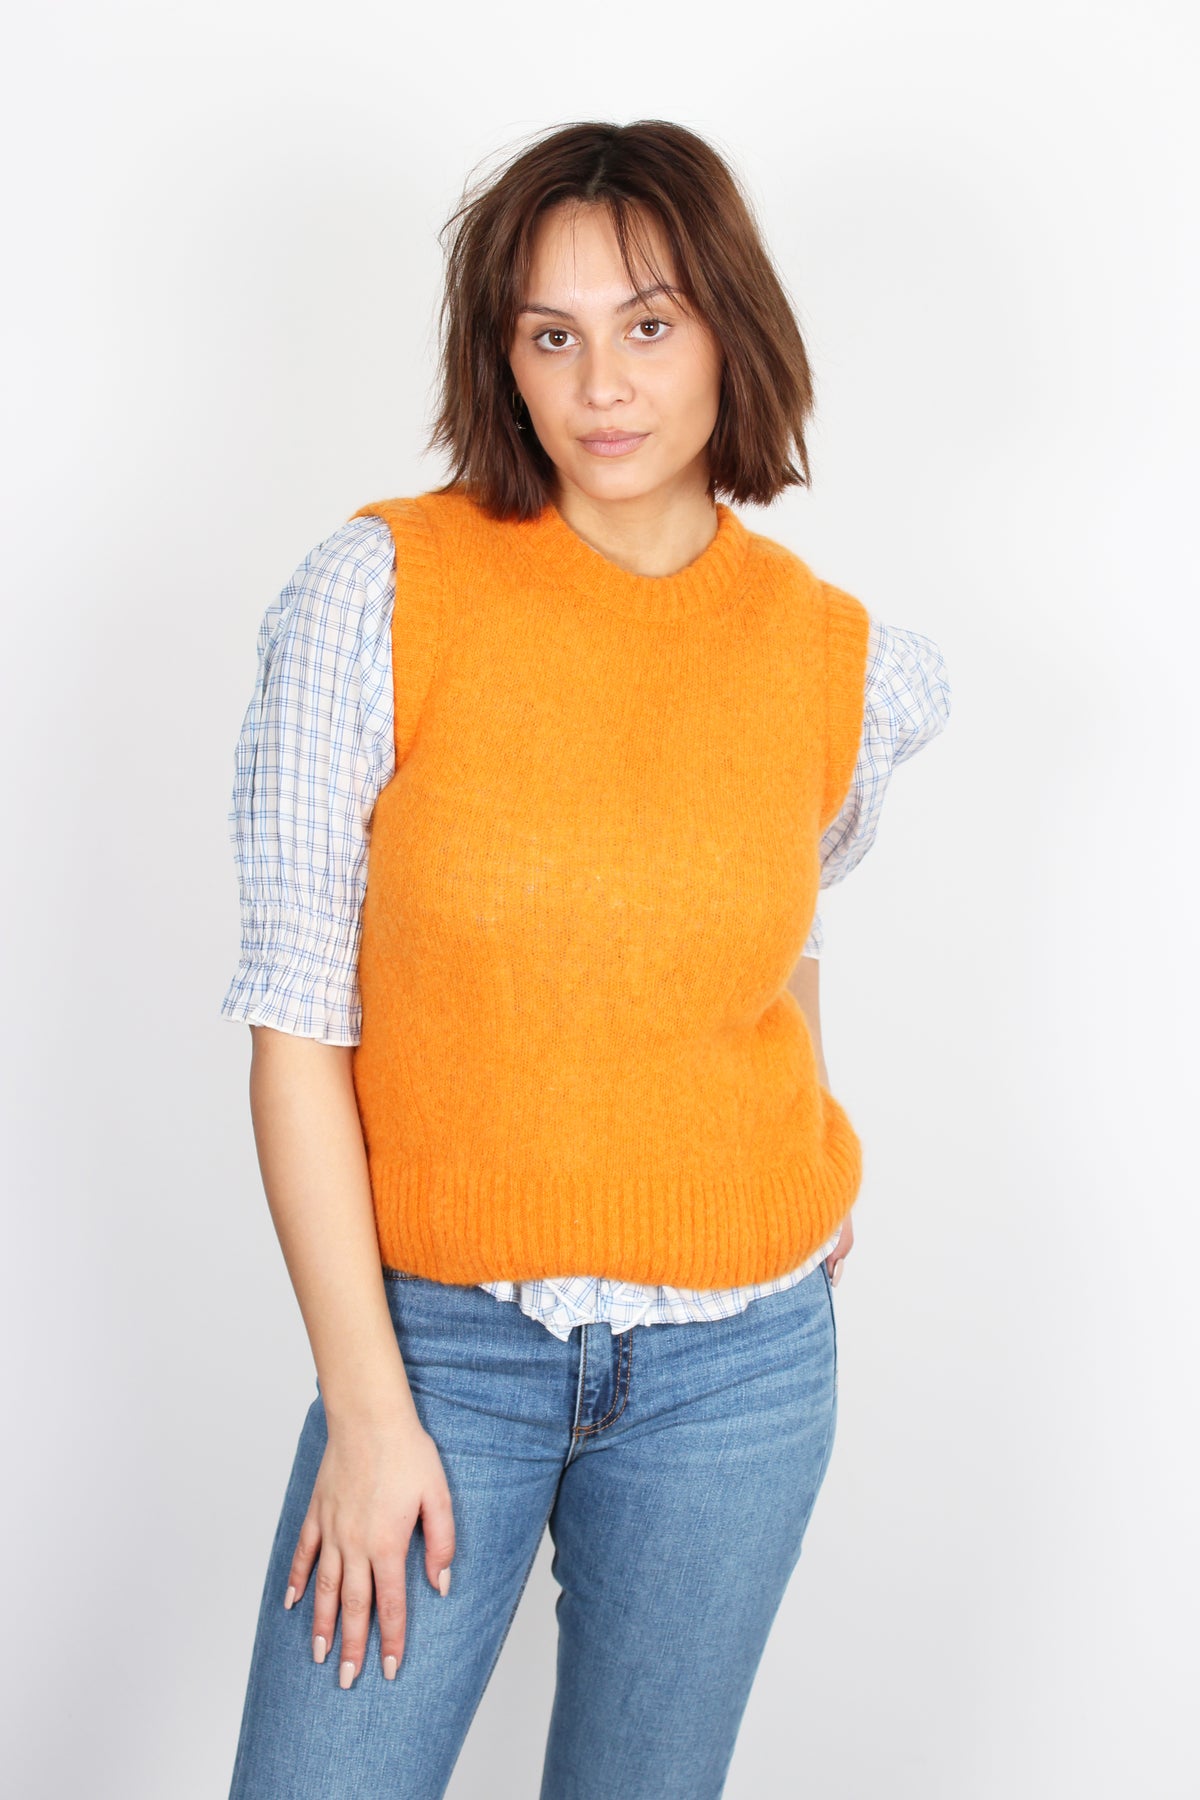 Leon & Harper Mochi sleeveless orange knit